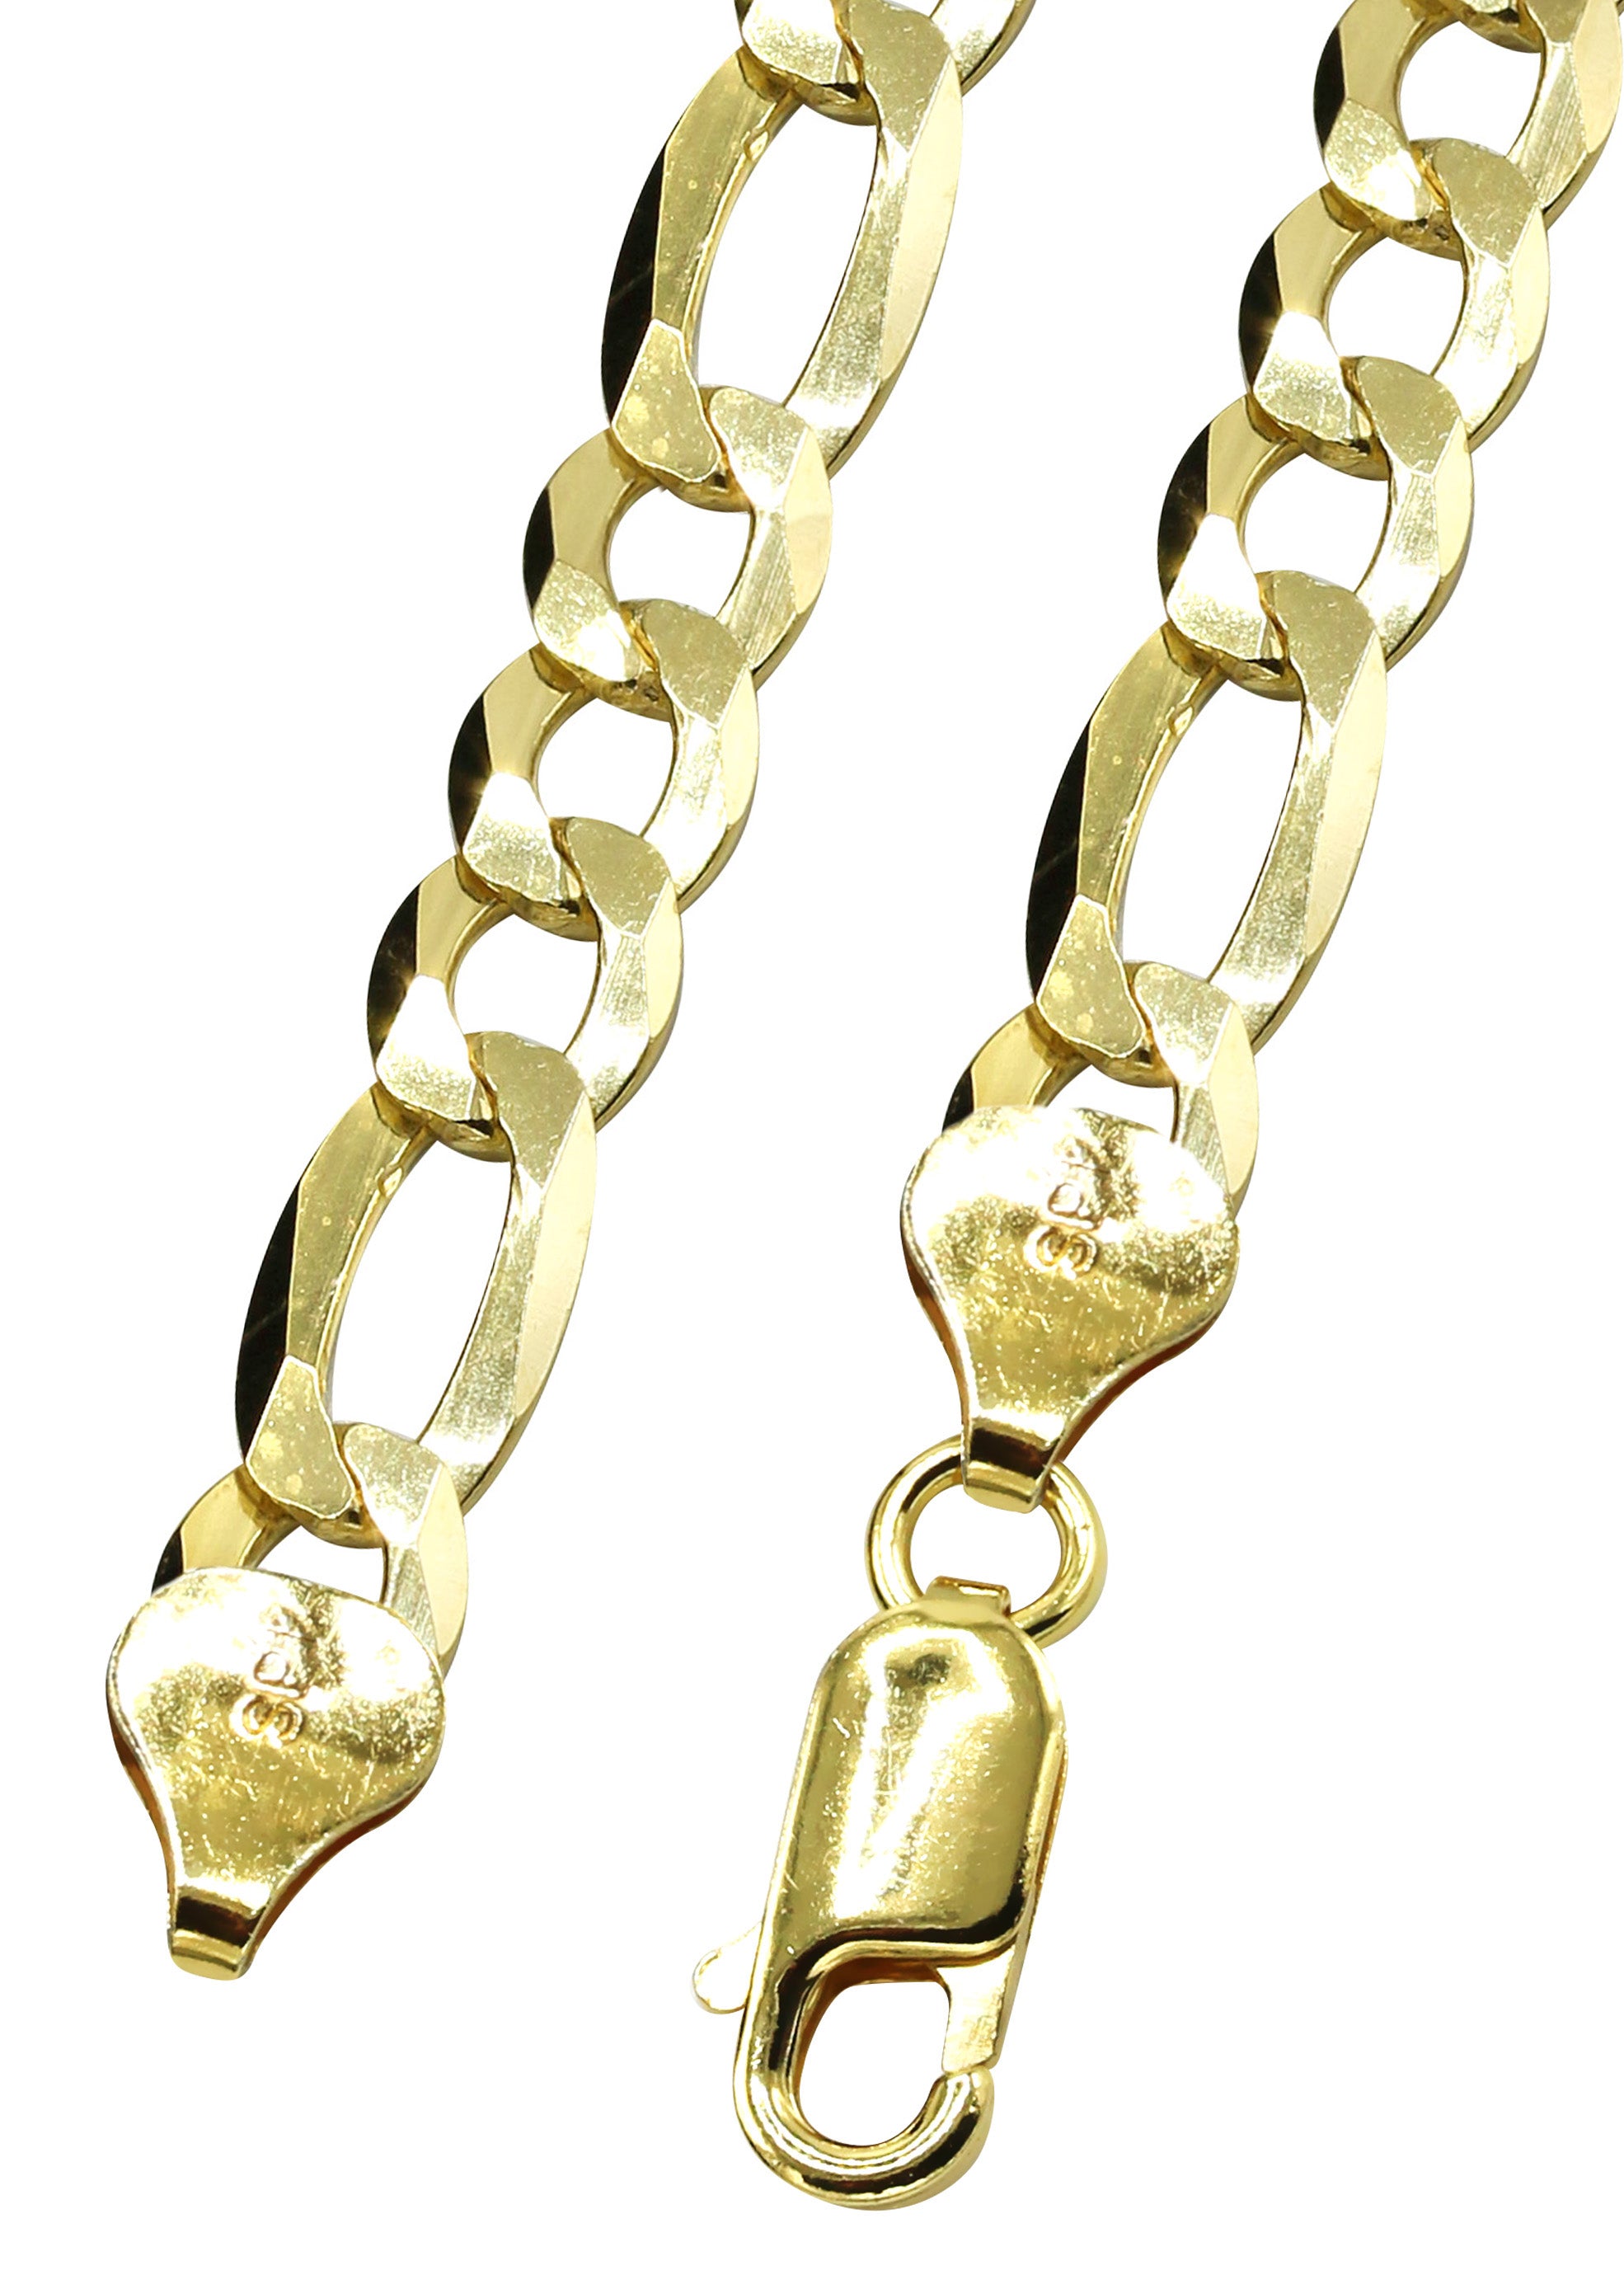 Silver Chain - Mens Gold Chain / Figaro Chain